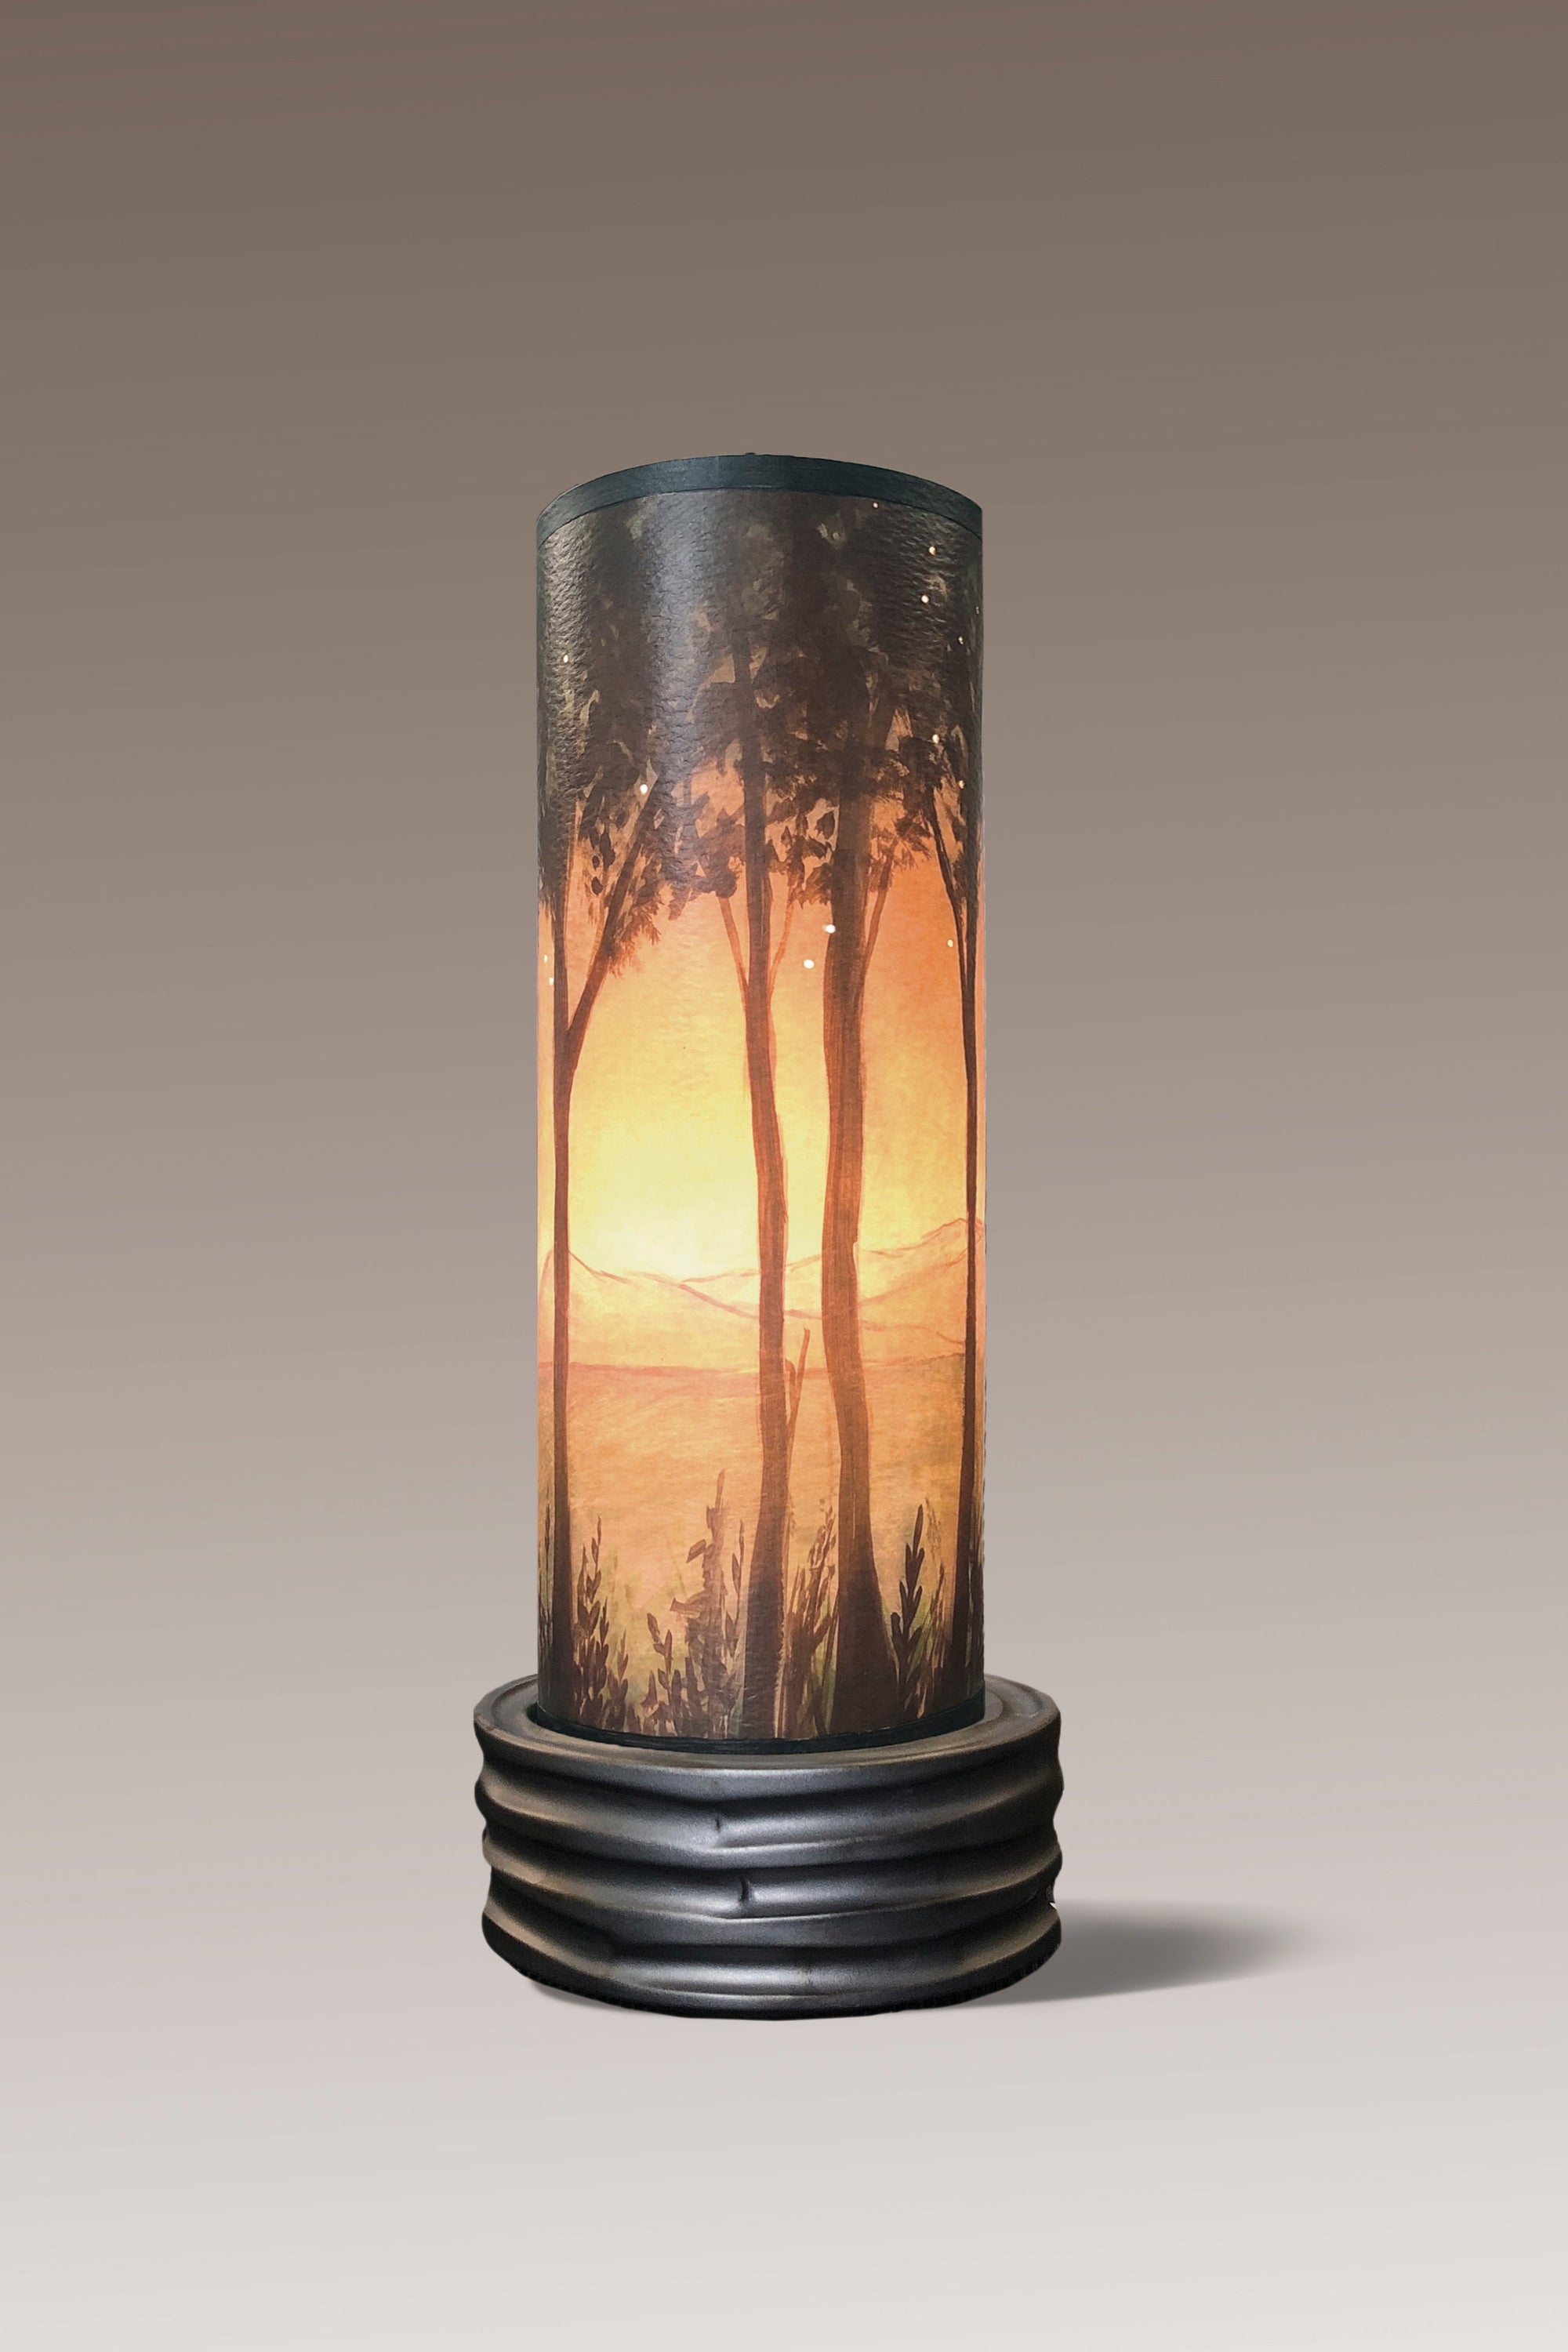 Janna Ugone & Co Luminaires Ceramic Luminaire Accent Lamp with Dawn Shade